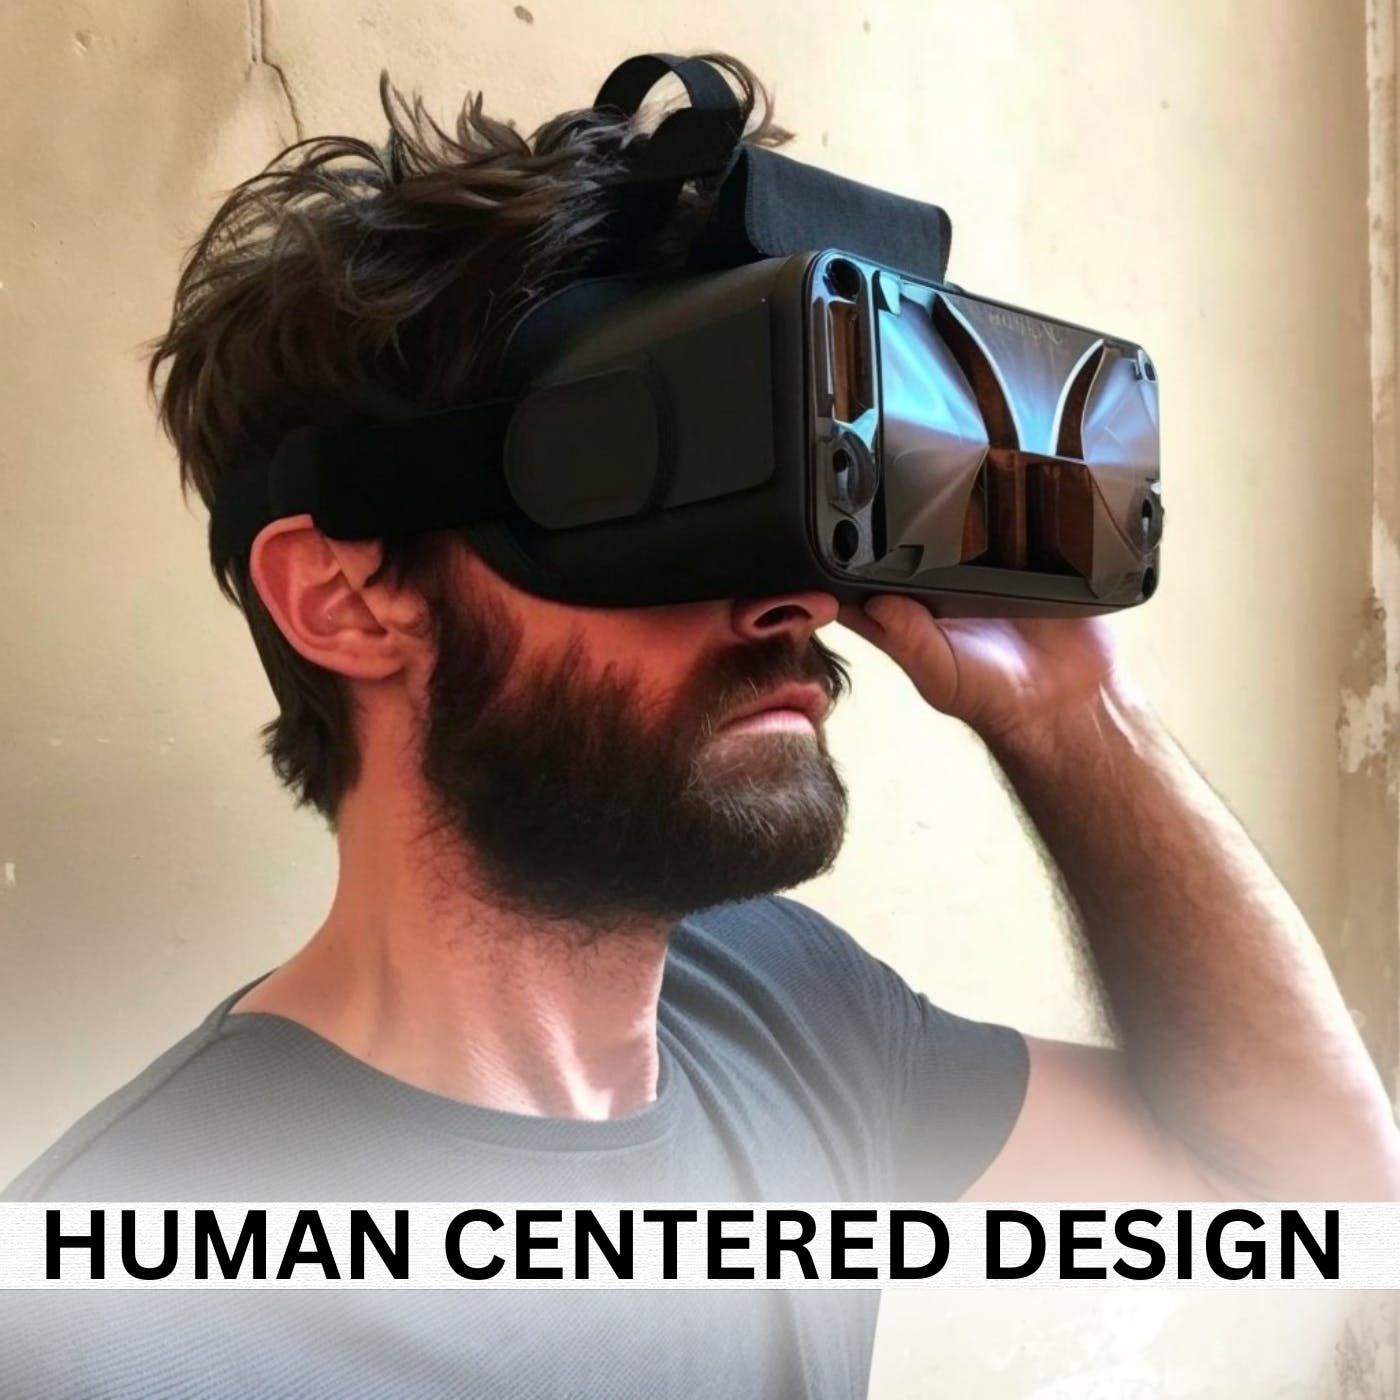 Human Centered Design Trailer